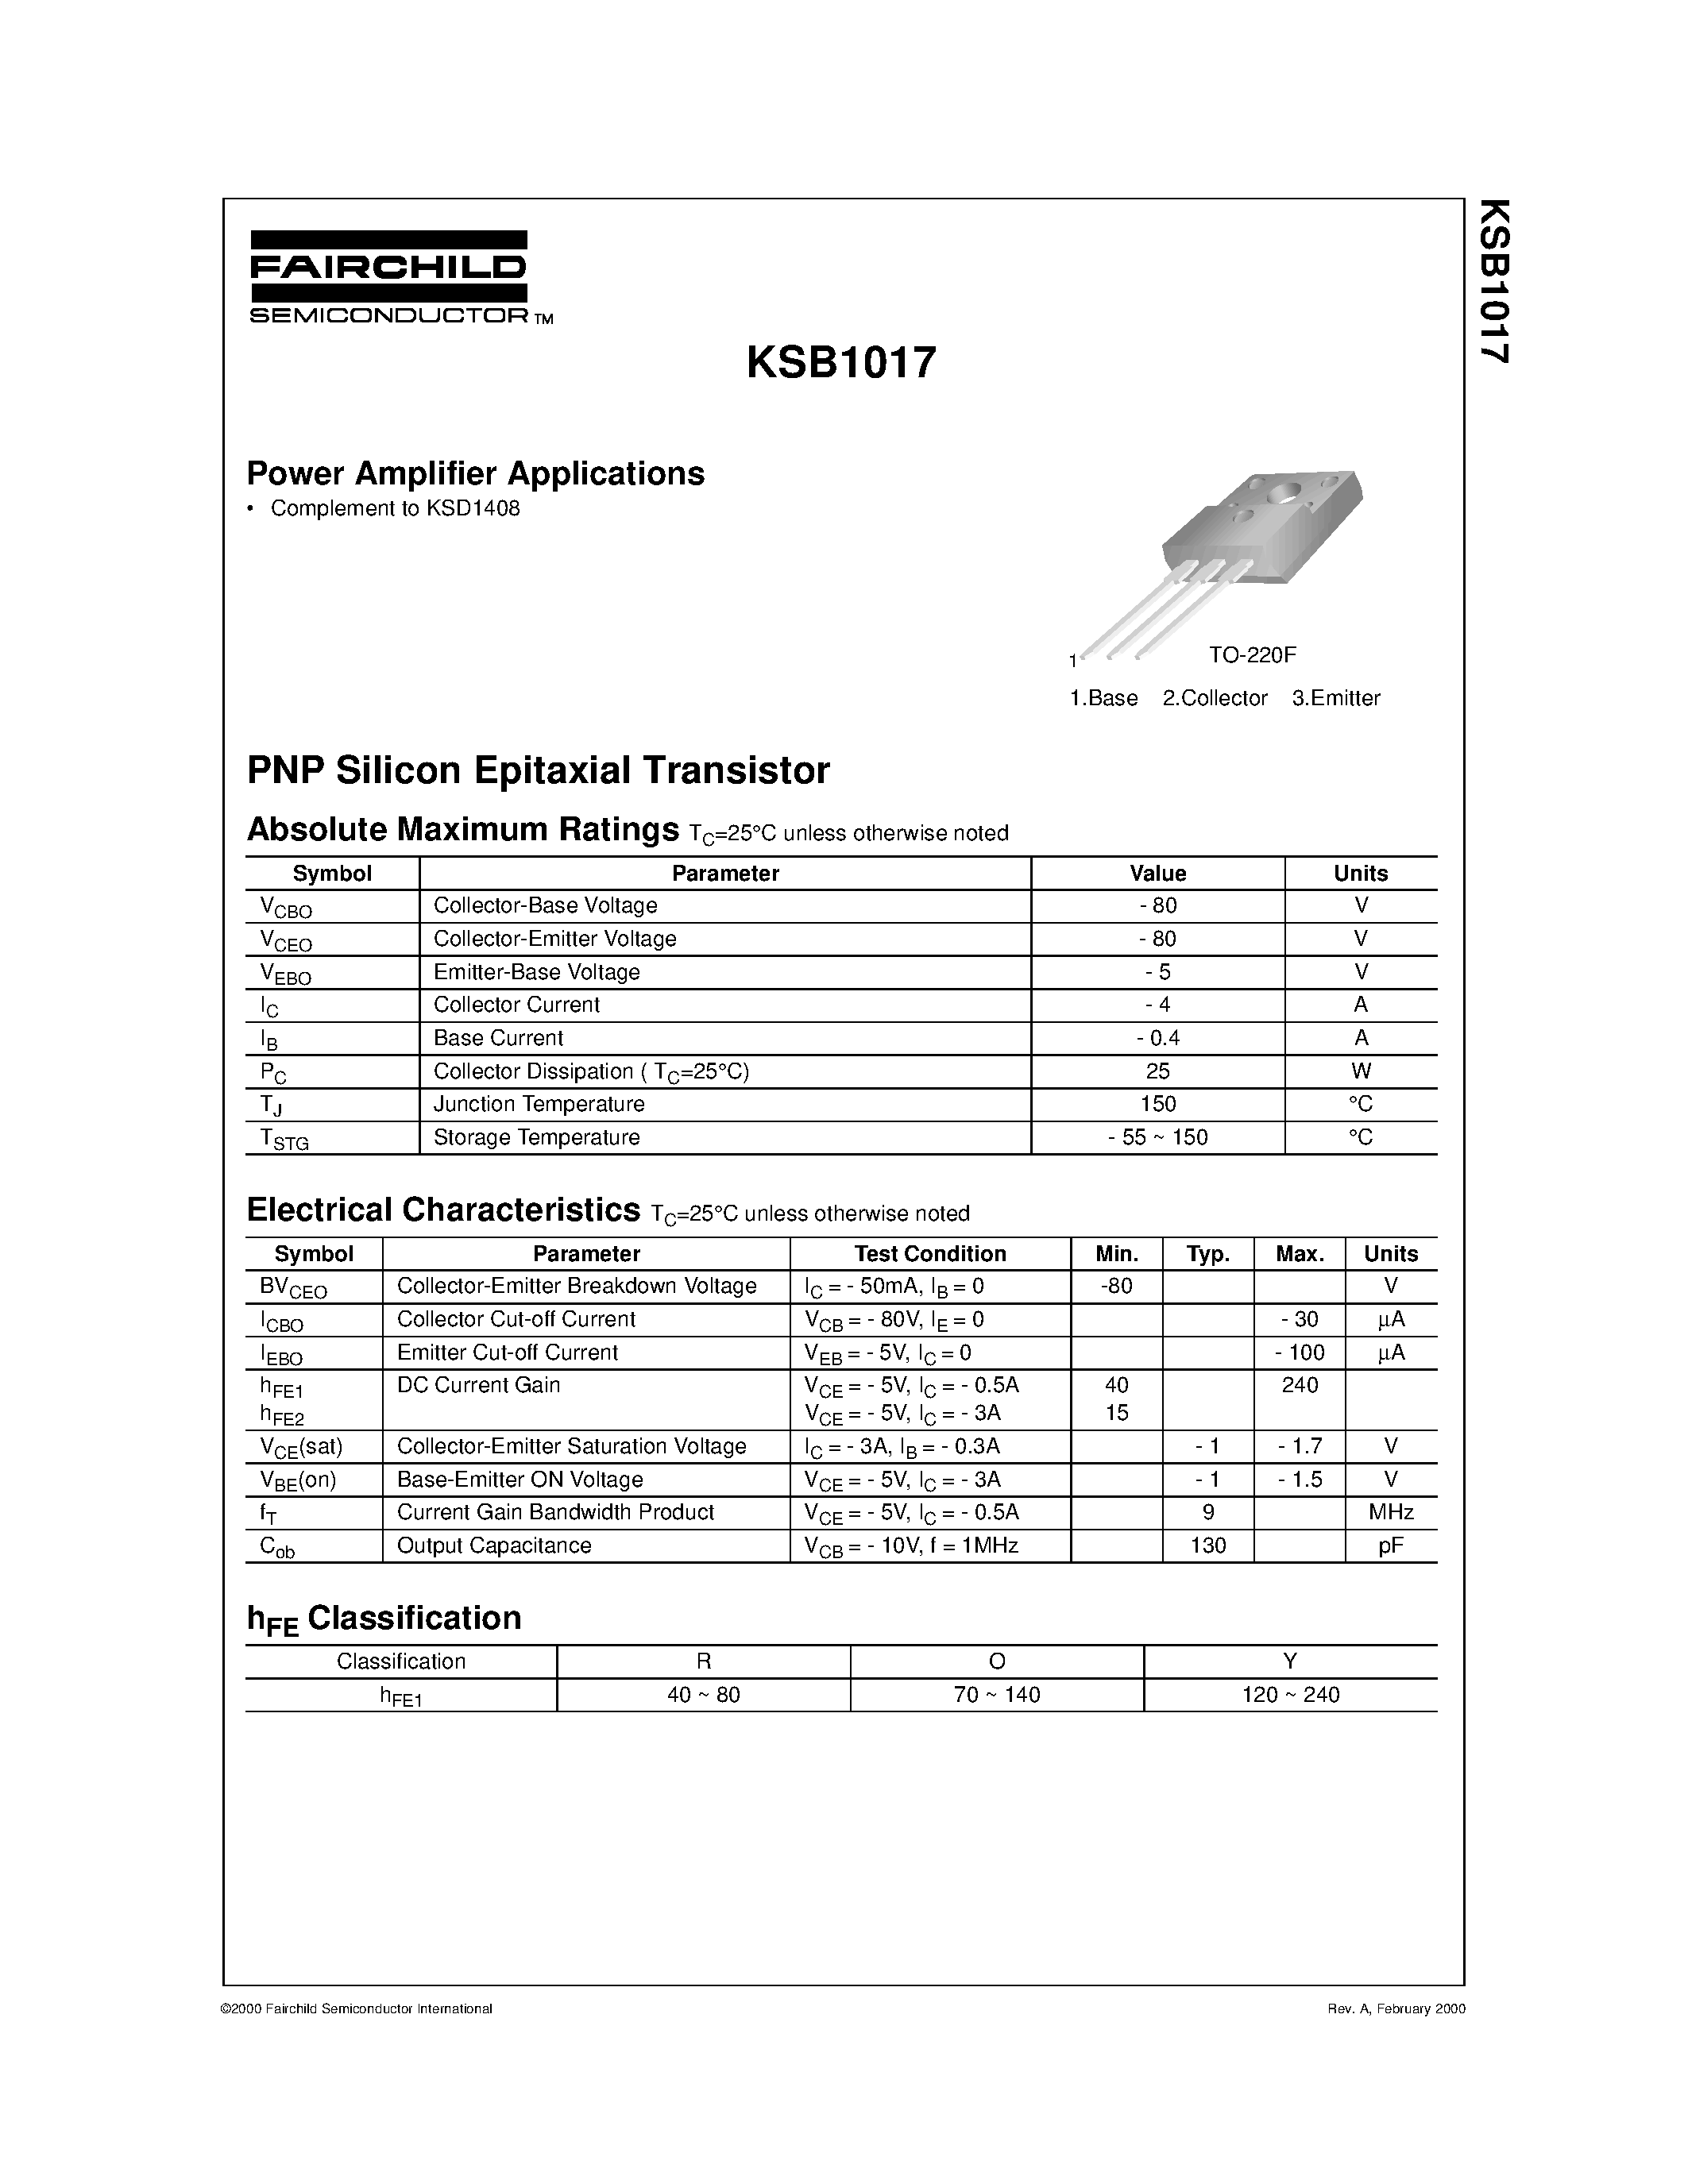 Datasheet KSB1017 - Power Amplifier Applications page 1